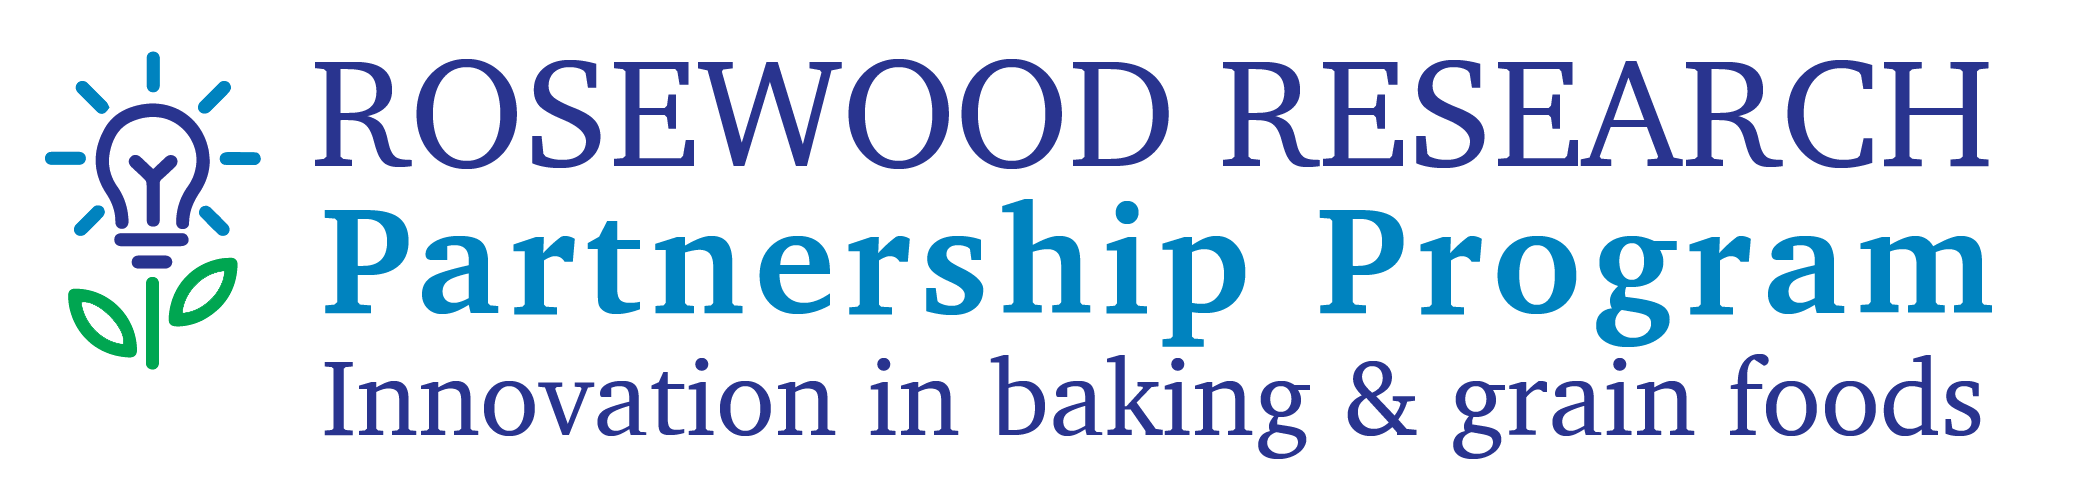 Rosewood Partnership Program Logo